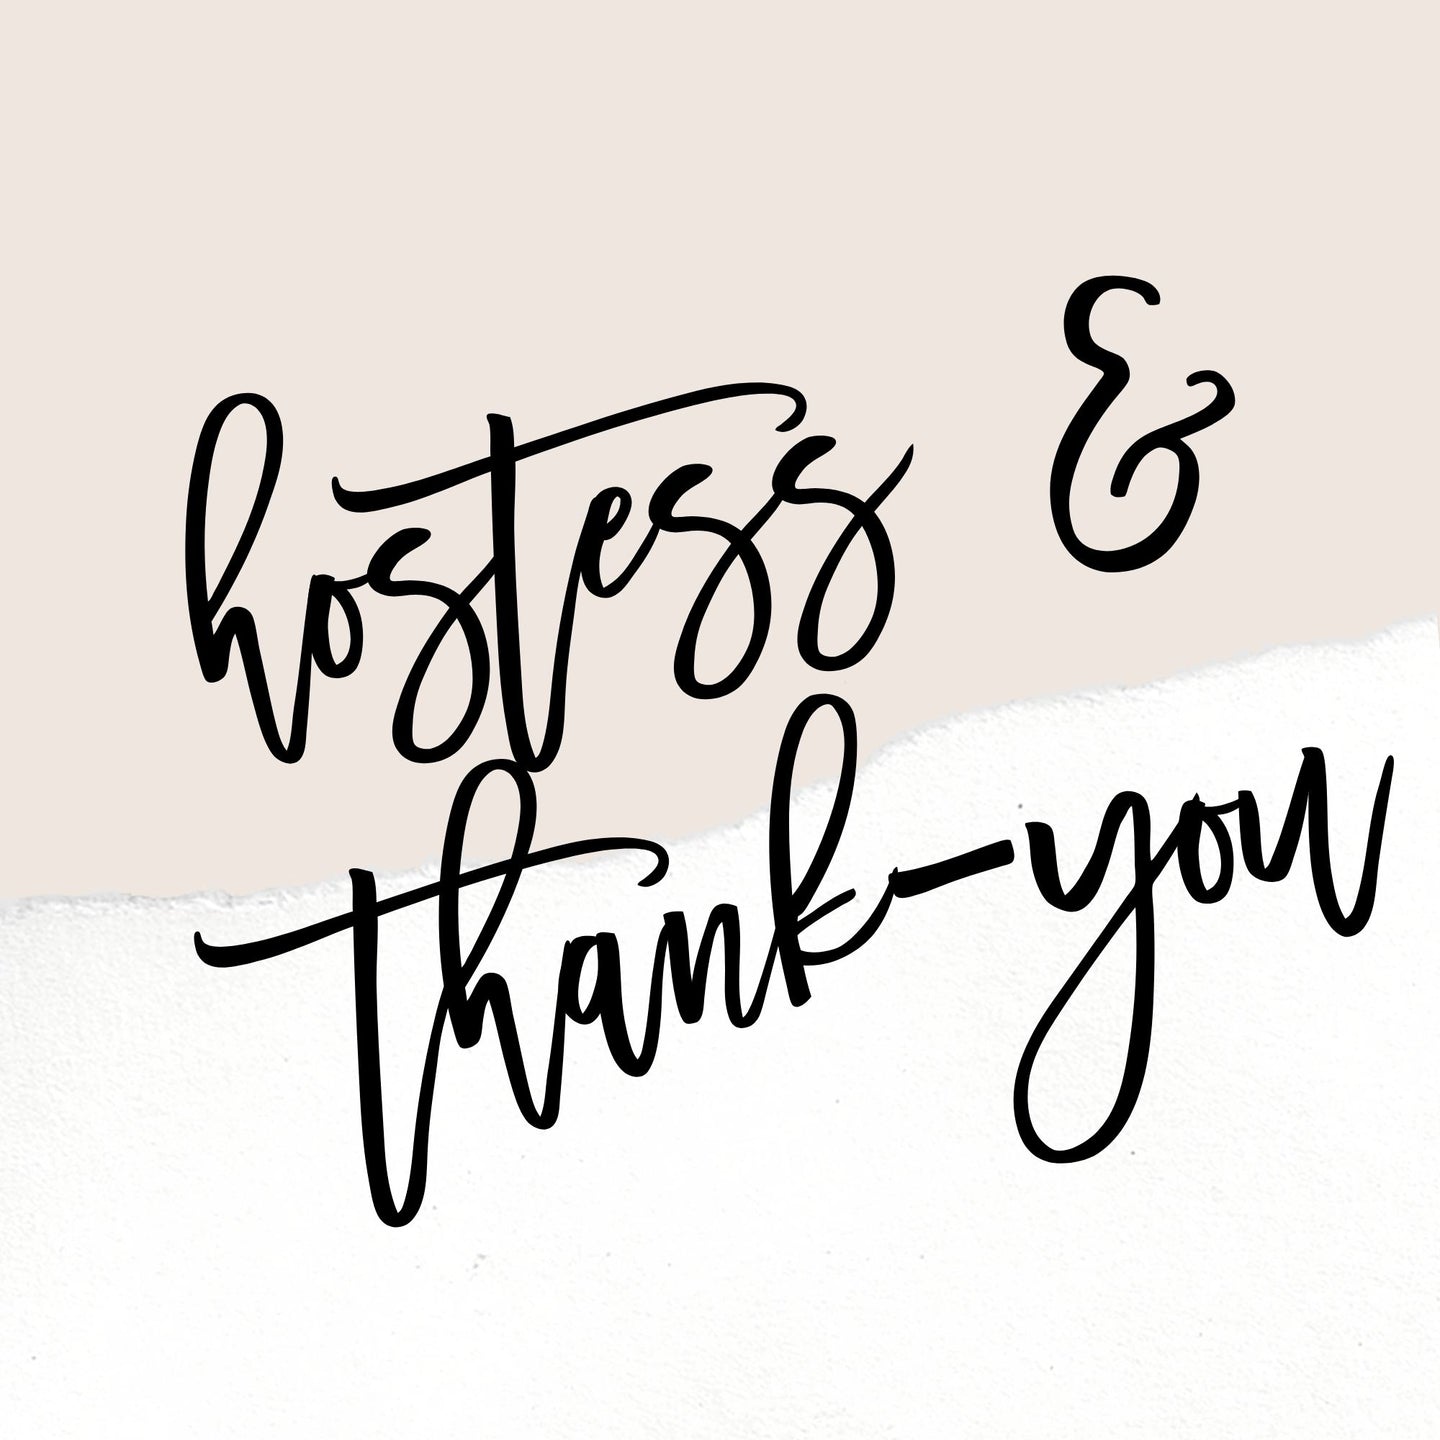 Hostess - Thank you - Bridal